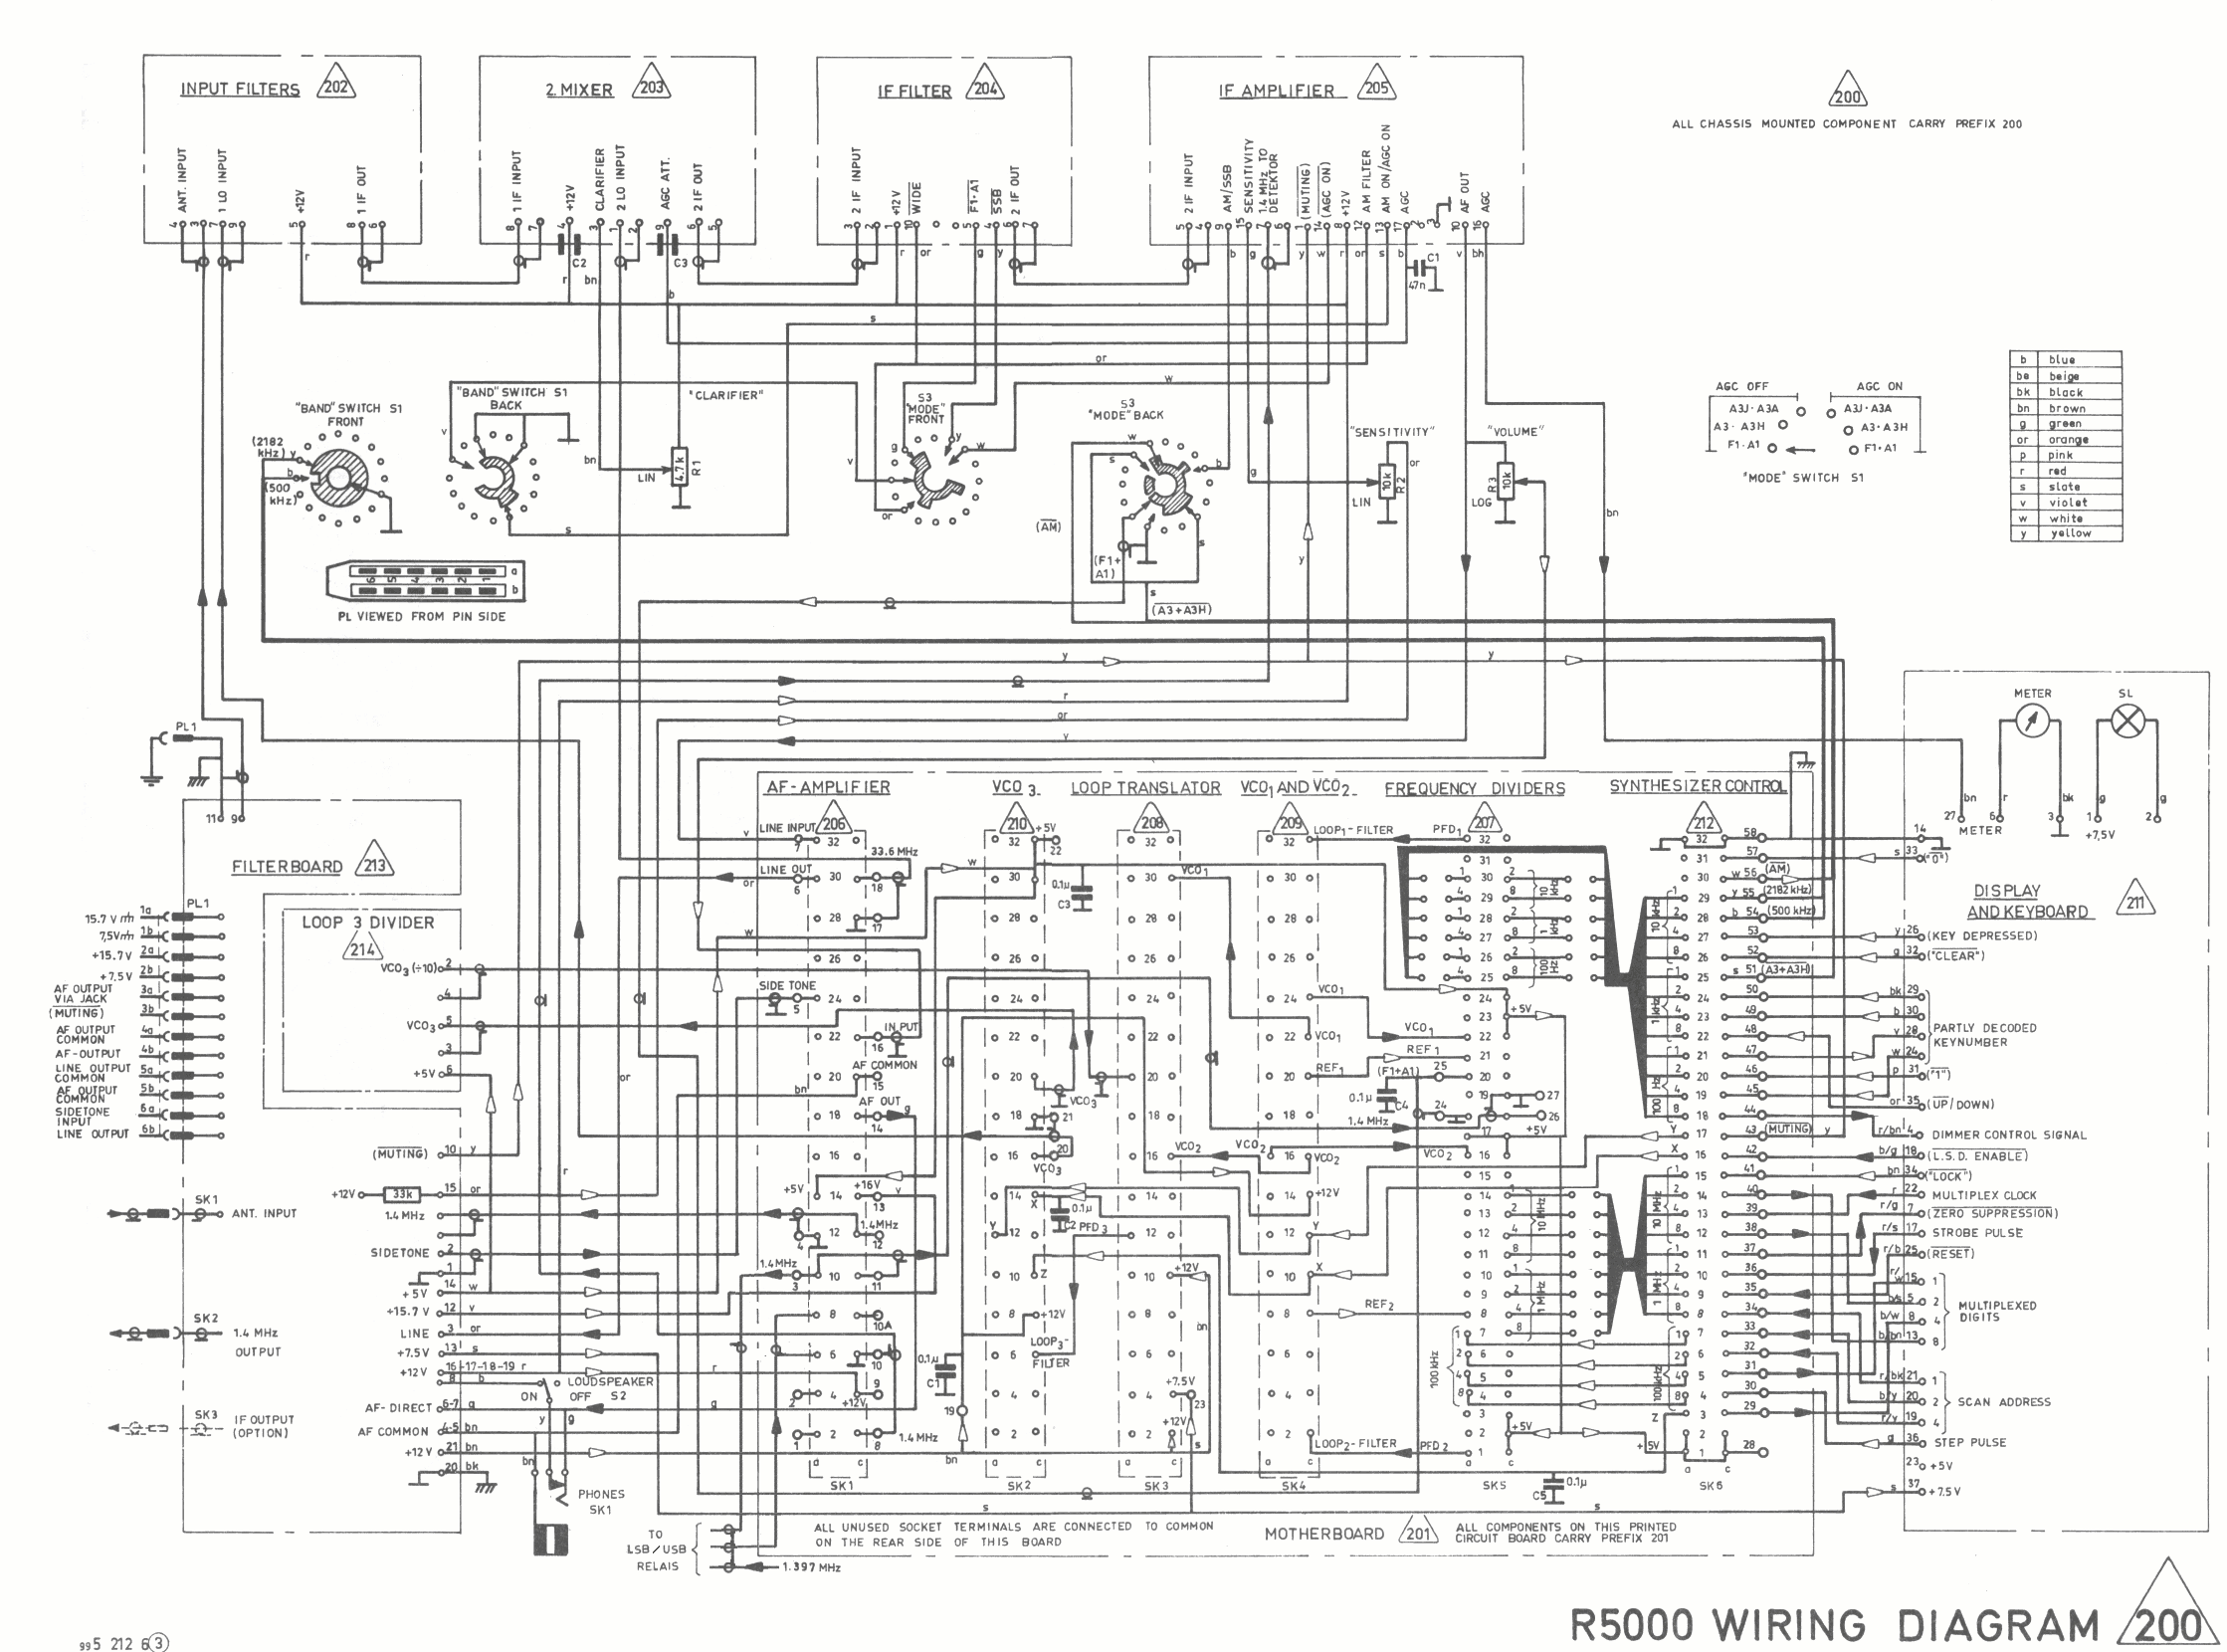 Skanti 5001 Motherboard wiring diagram 200